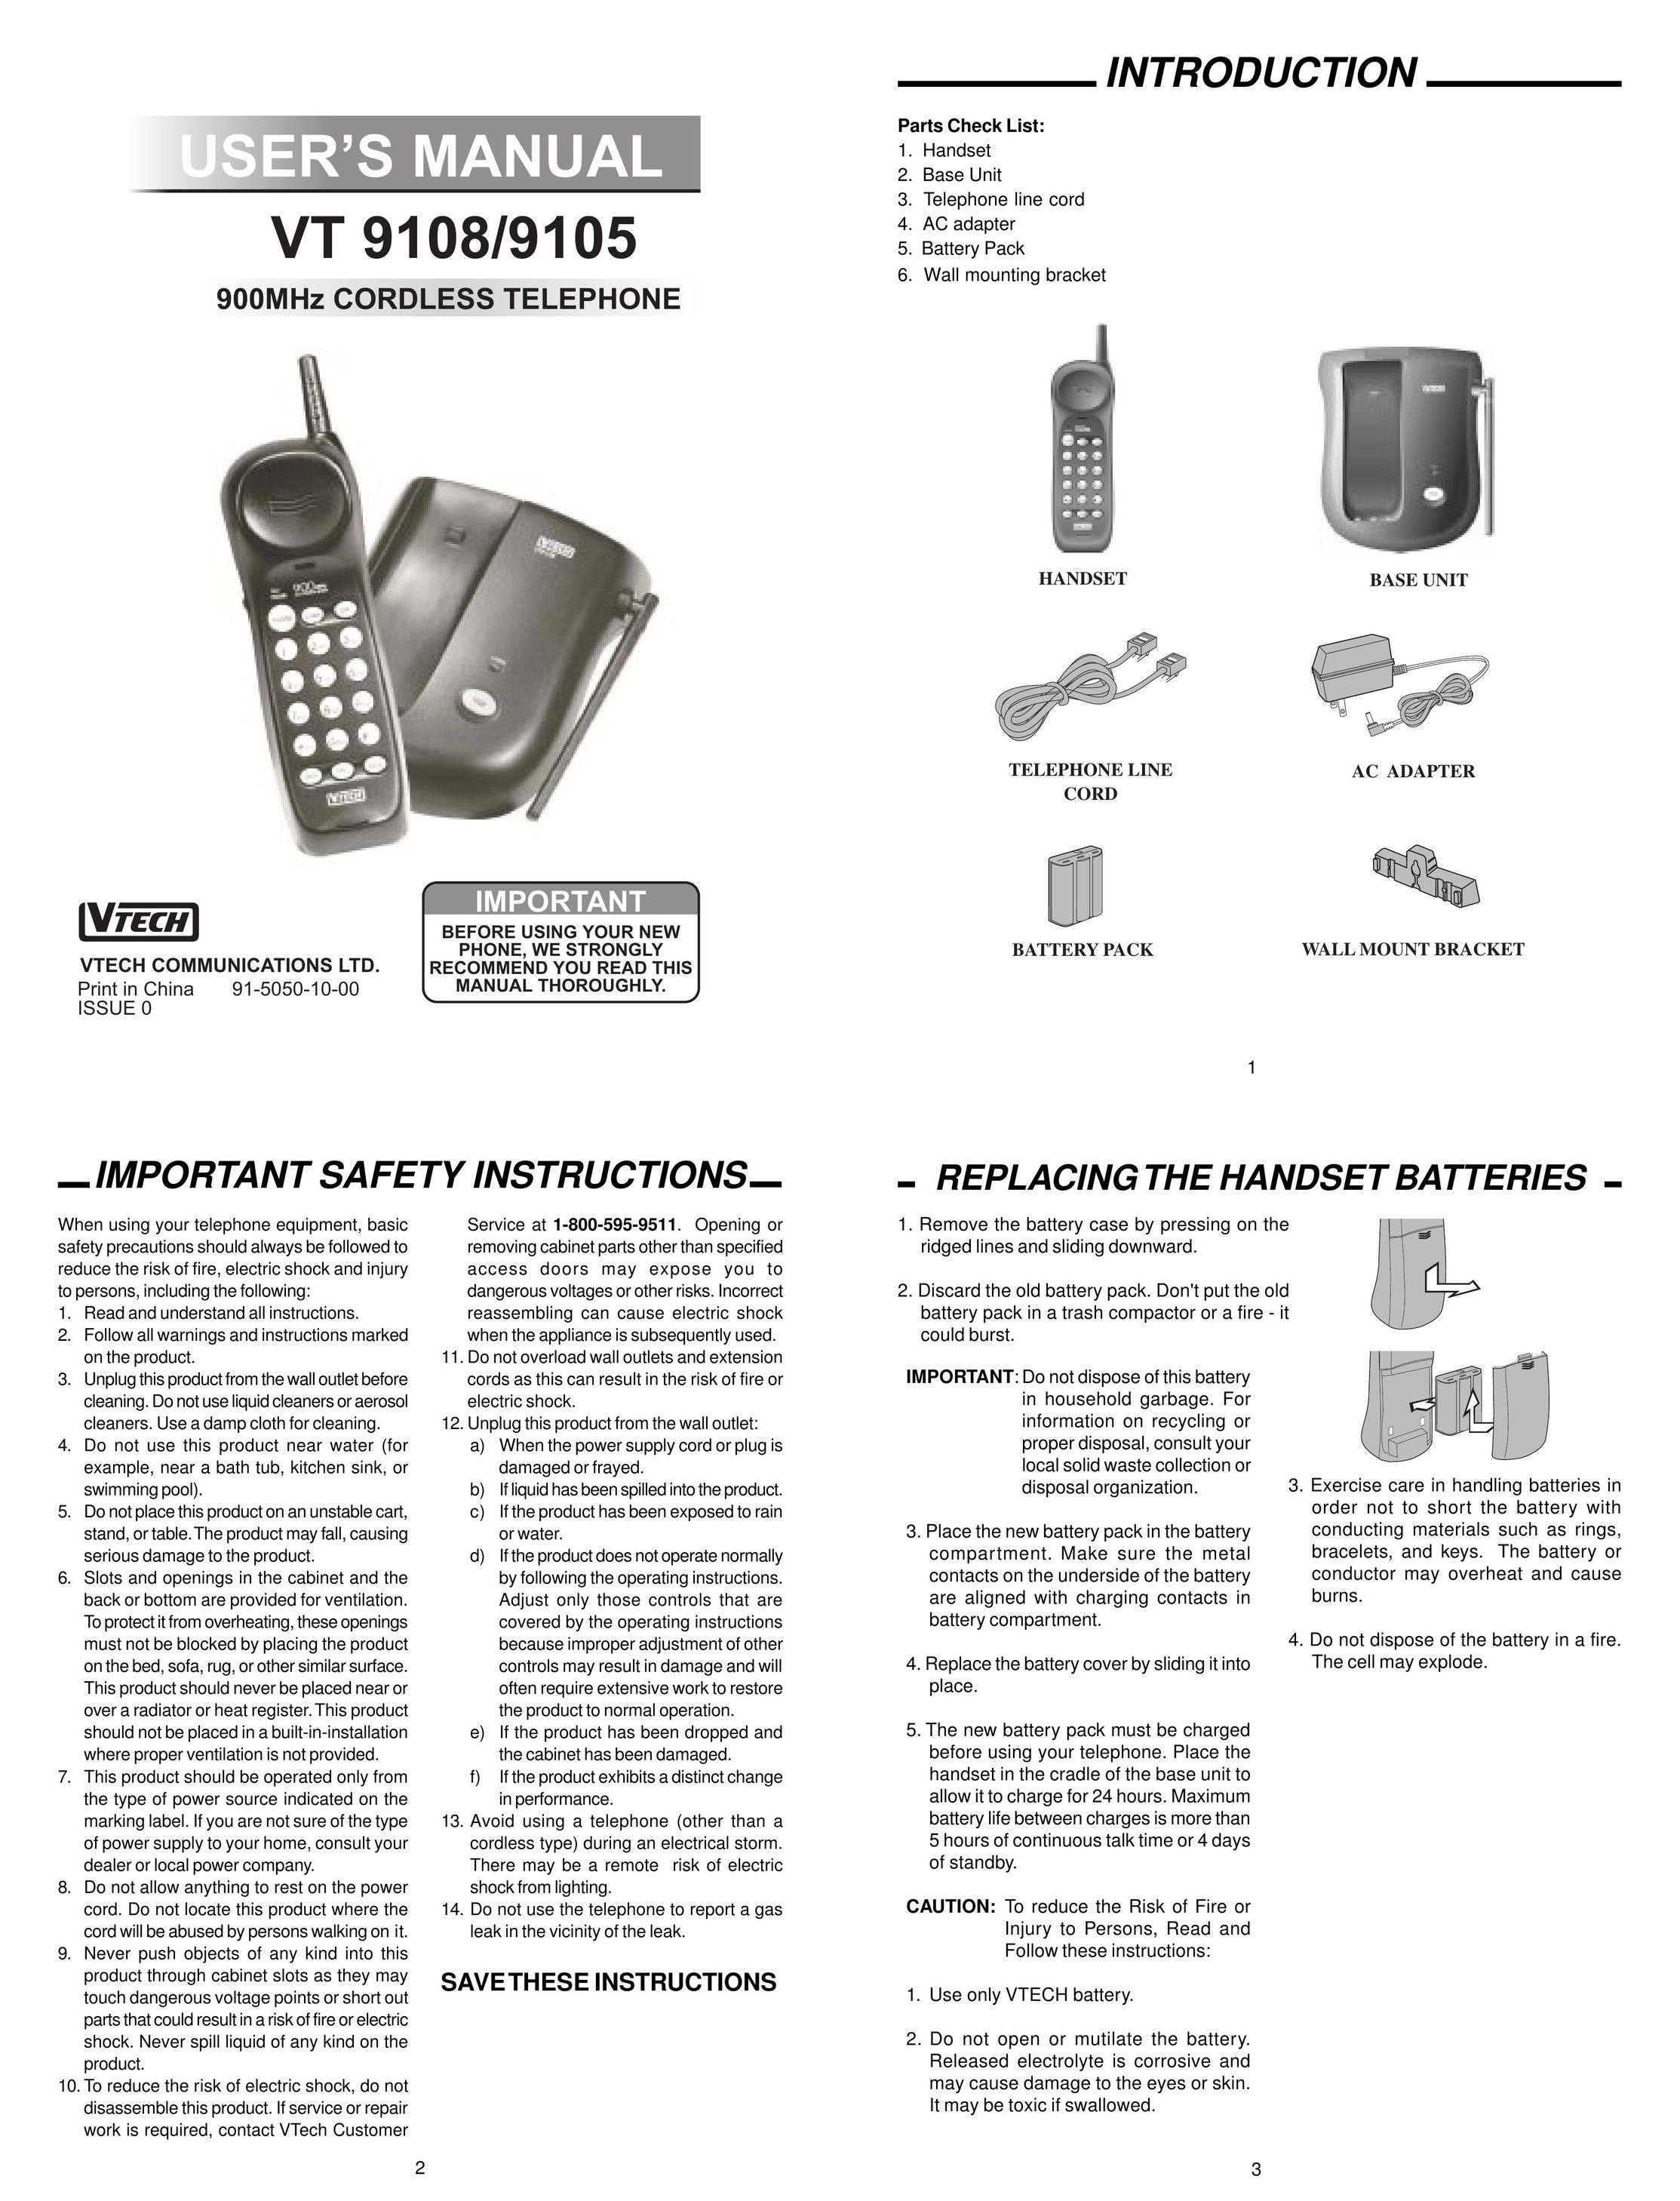 VTech 9108 Cordless Telephone User Manual